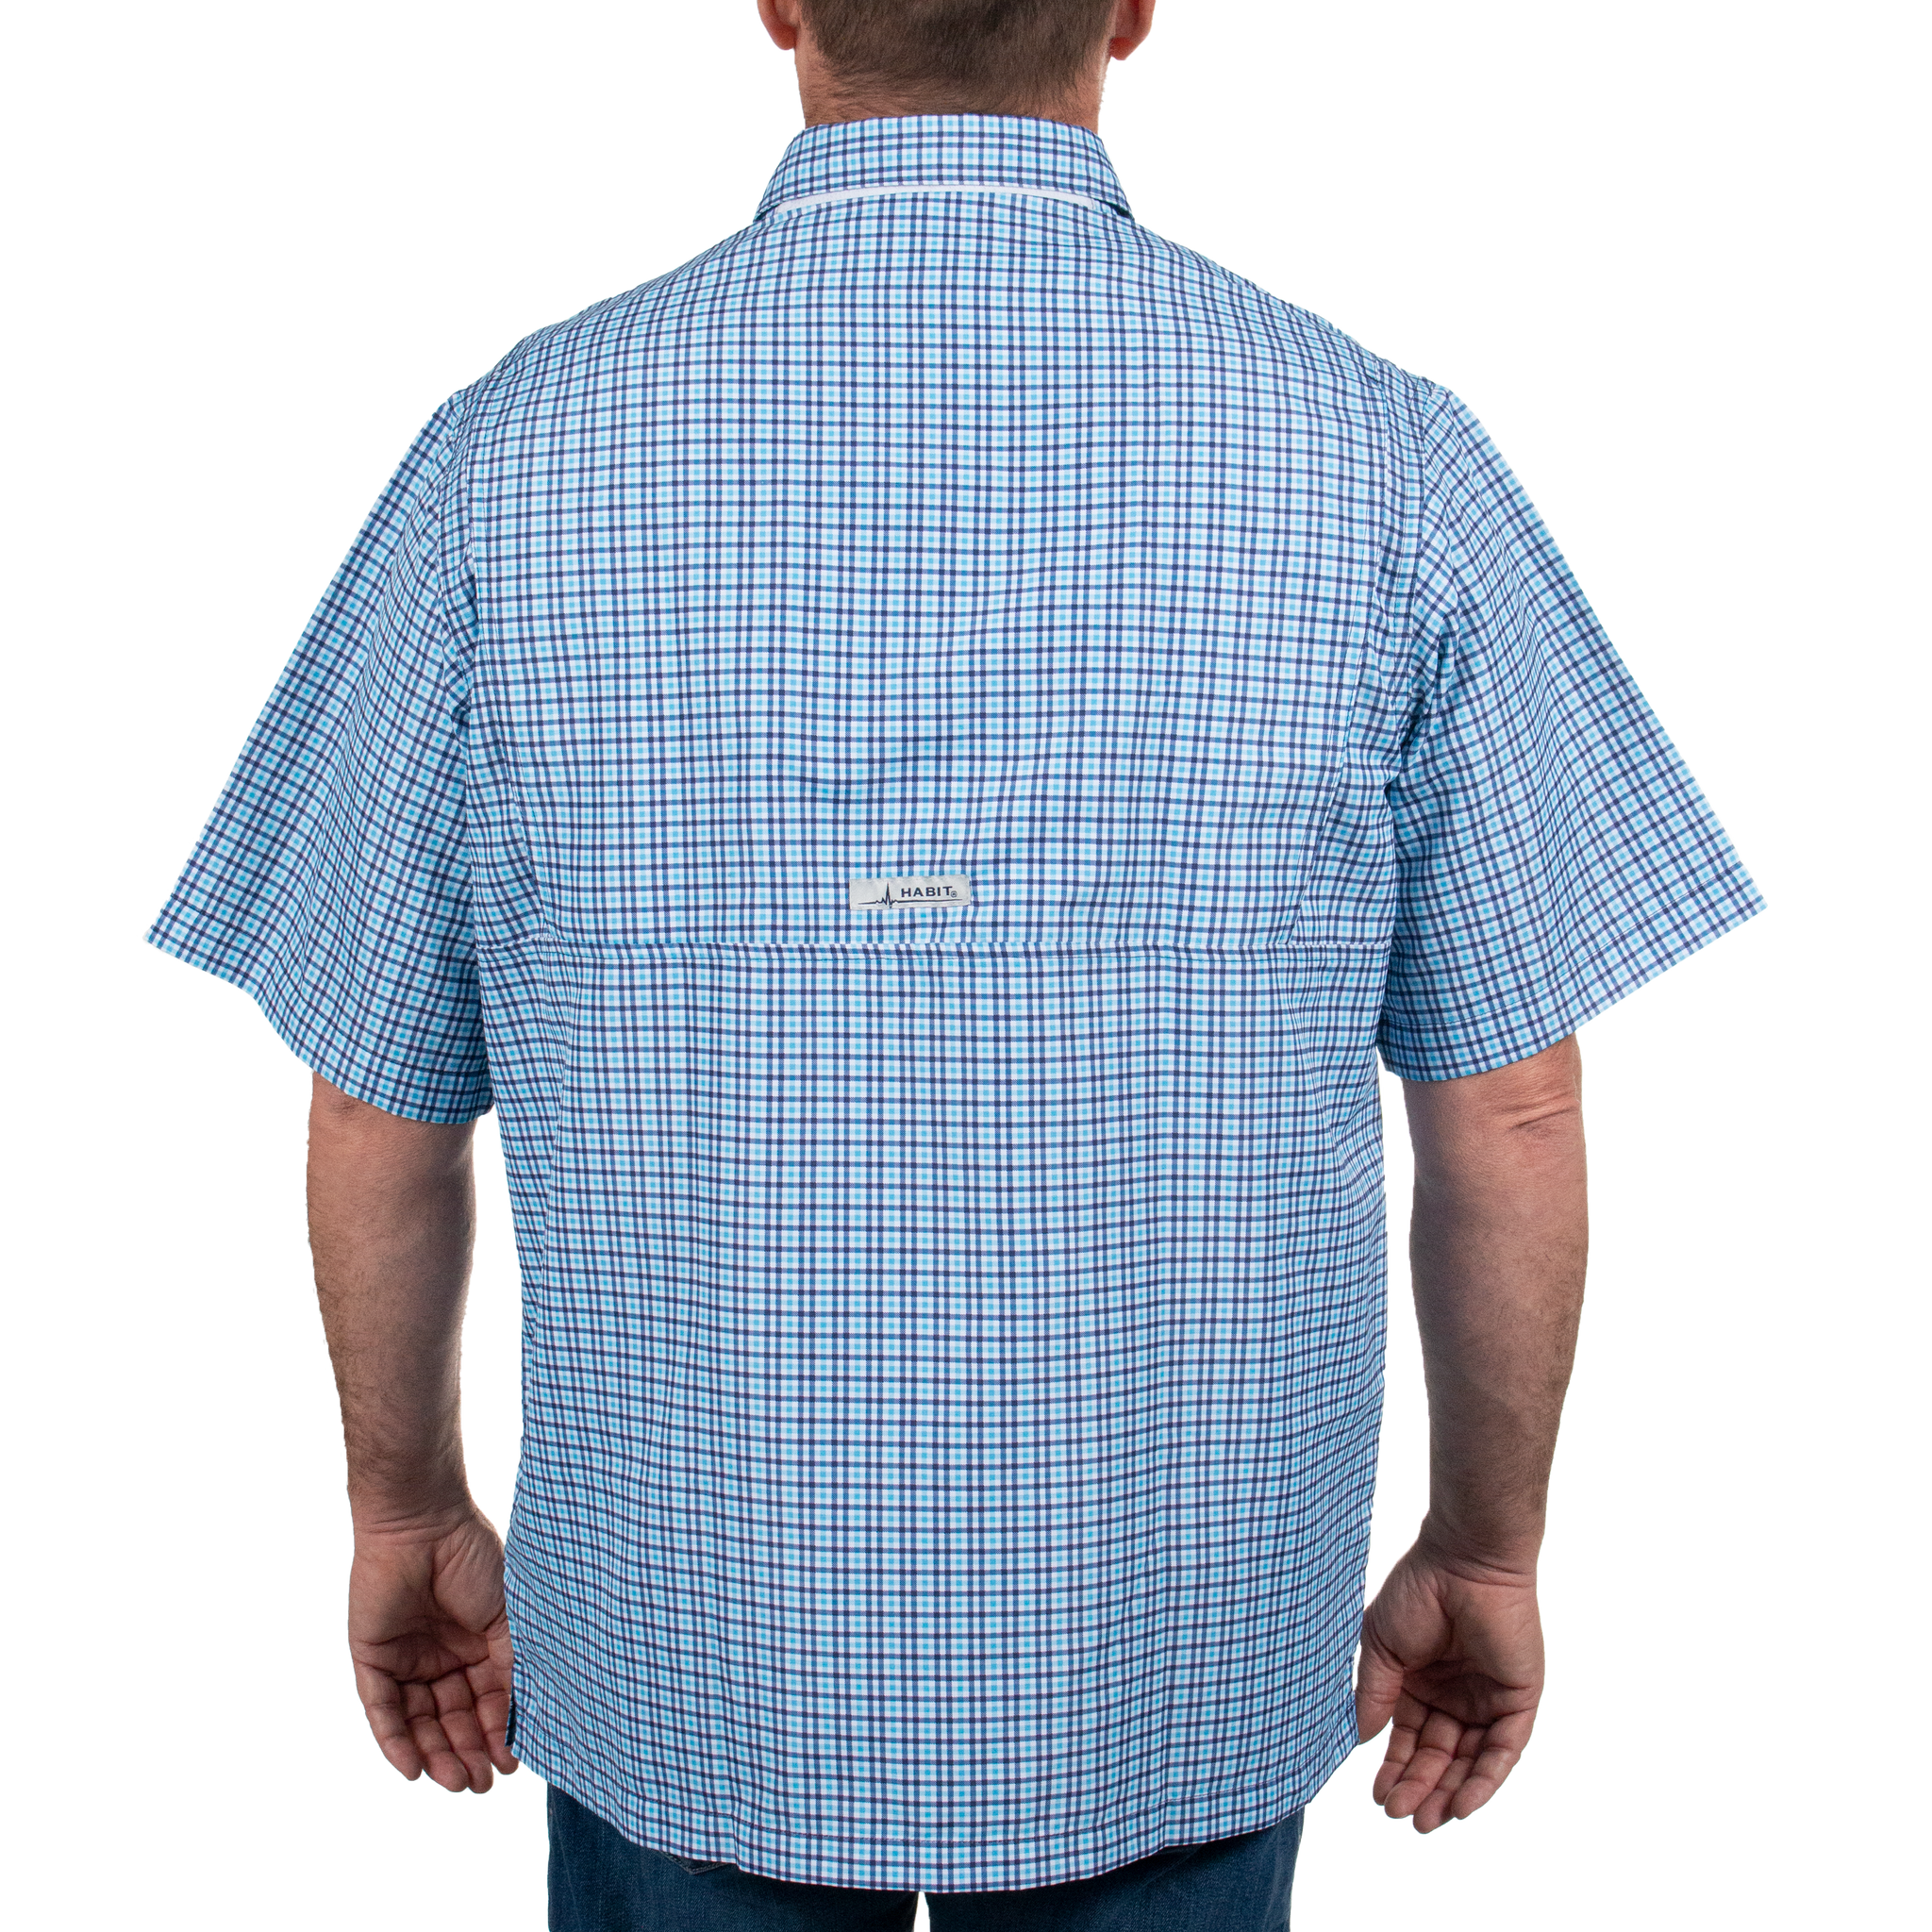 Buy HABIT Men's Short Sleeve Fishing Guide Shirt, Bahama Blue Check, XX- Large at